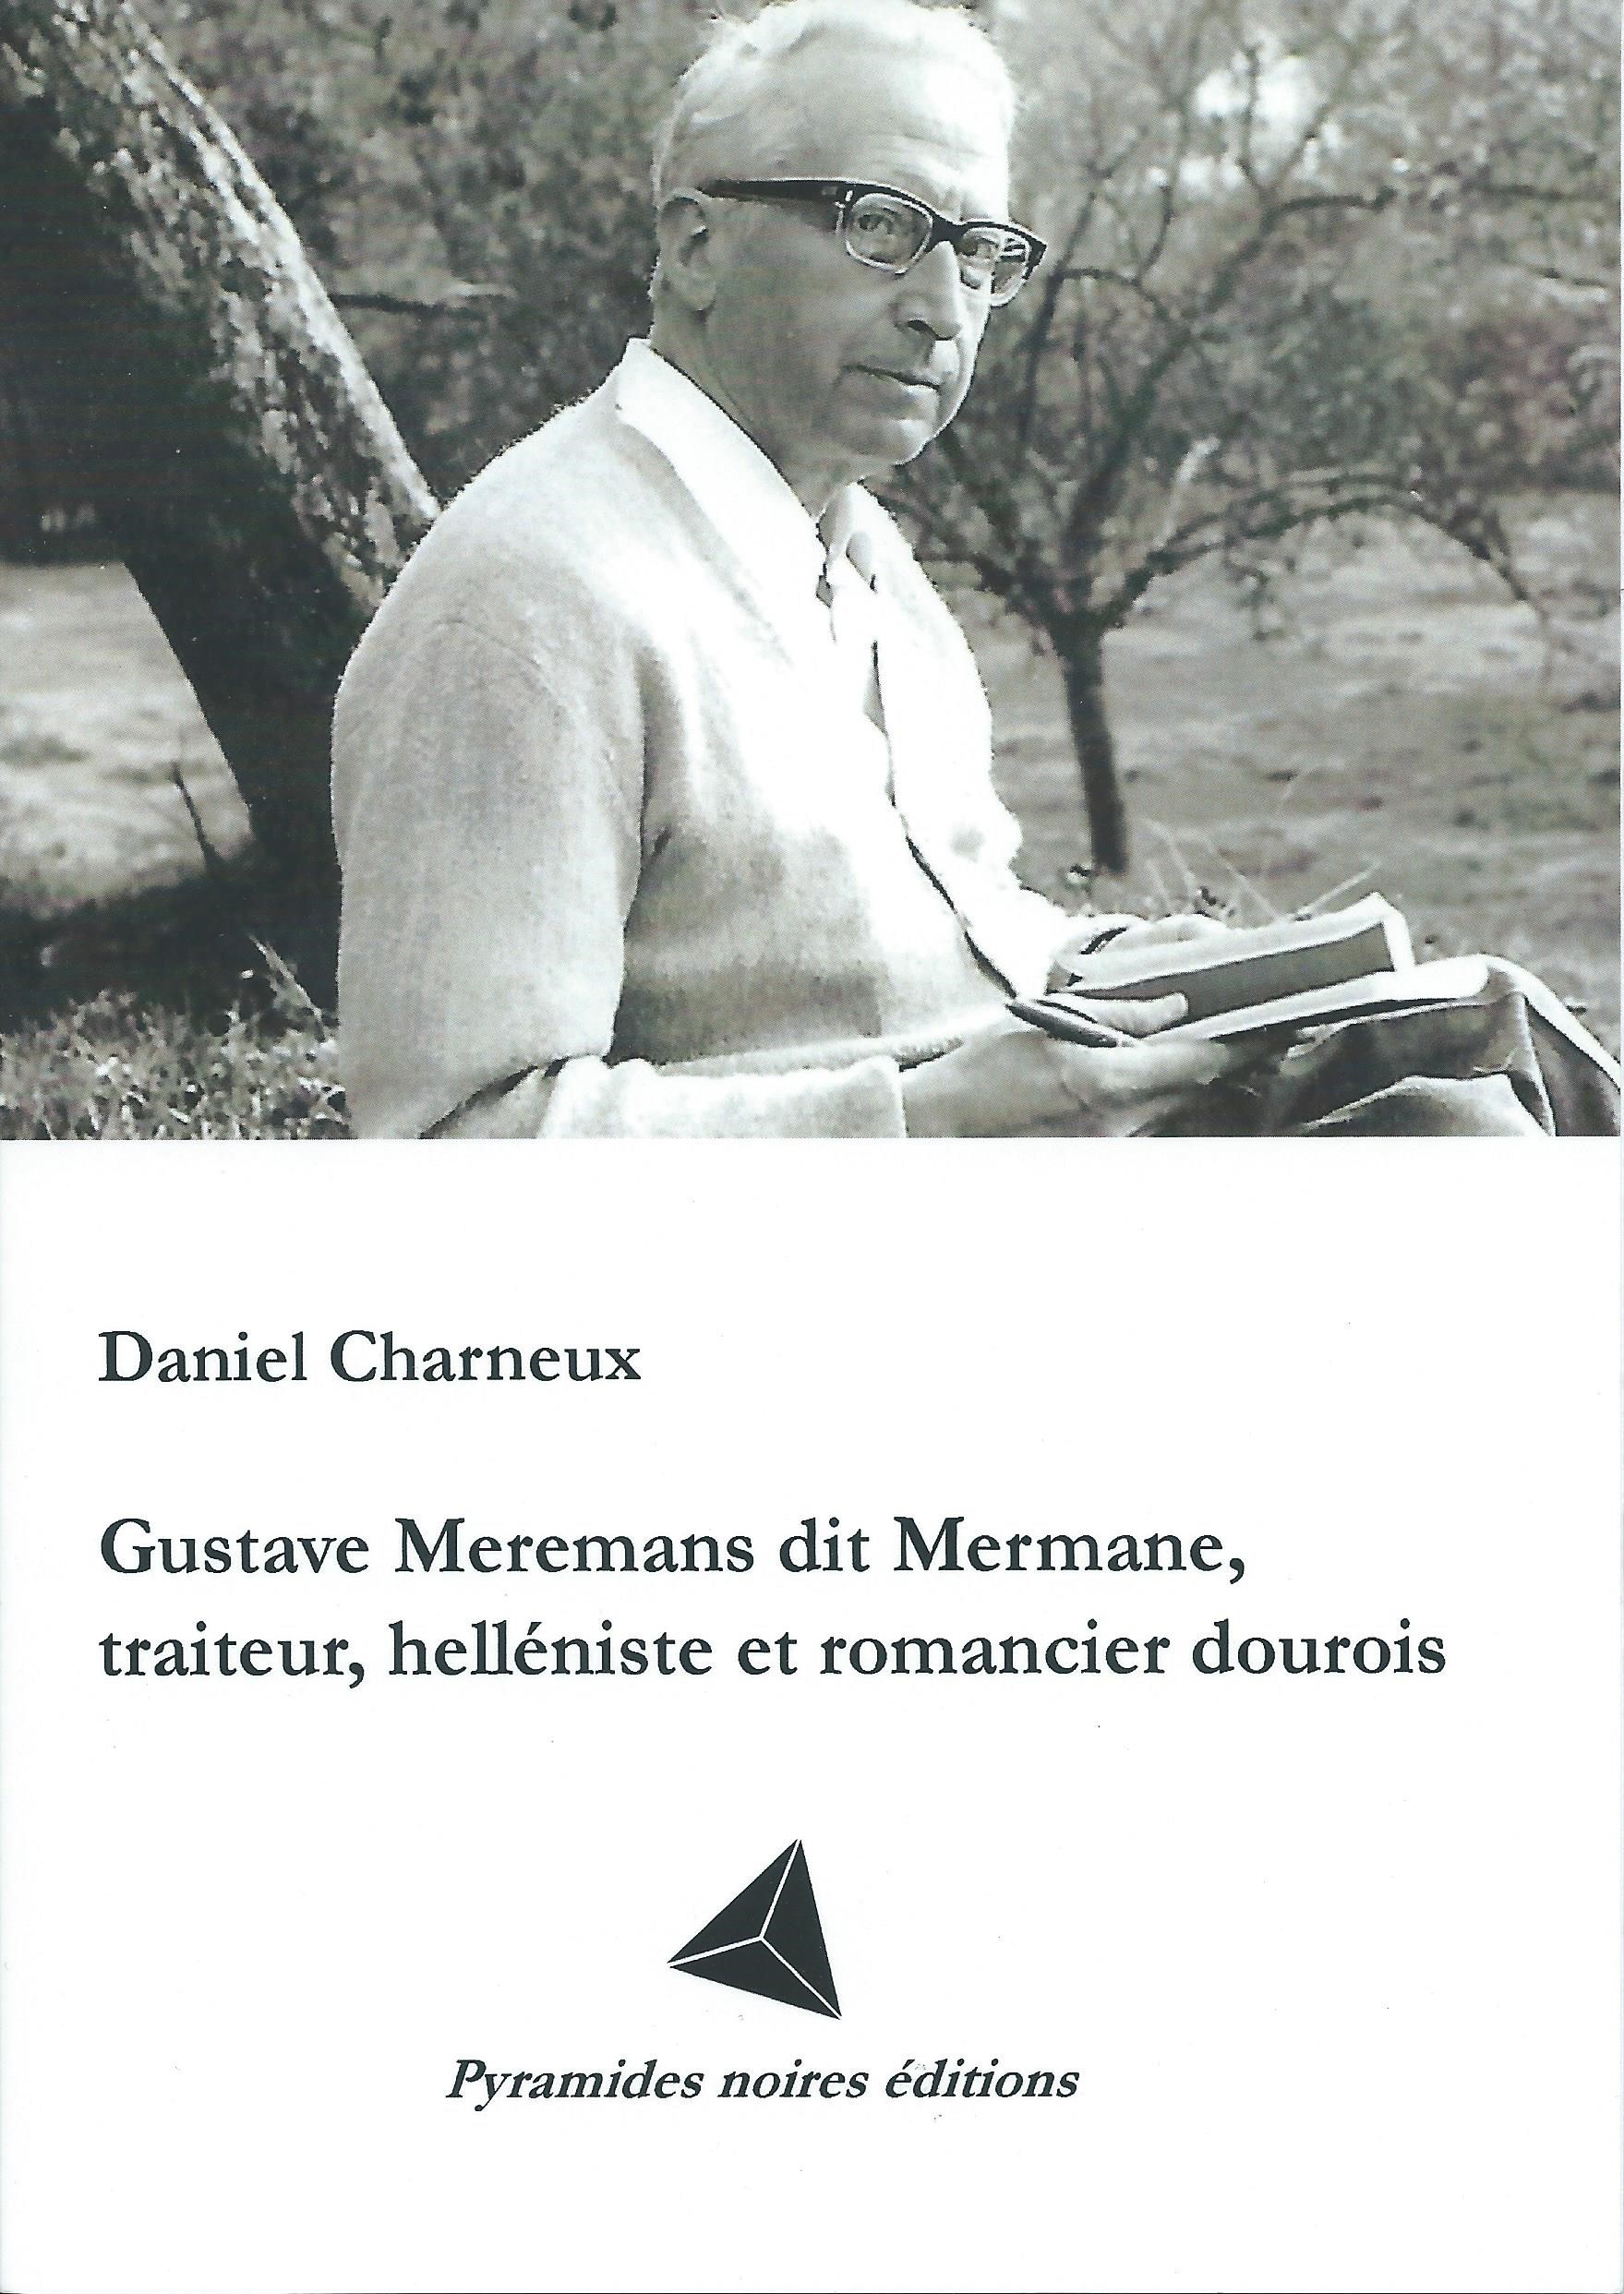 DANIEL CHARNEUX - Gustave Meremans dit Mermane